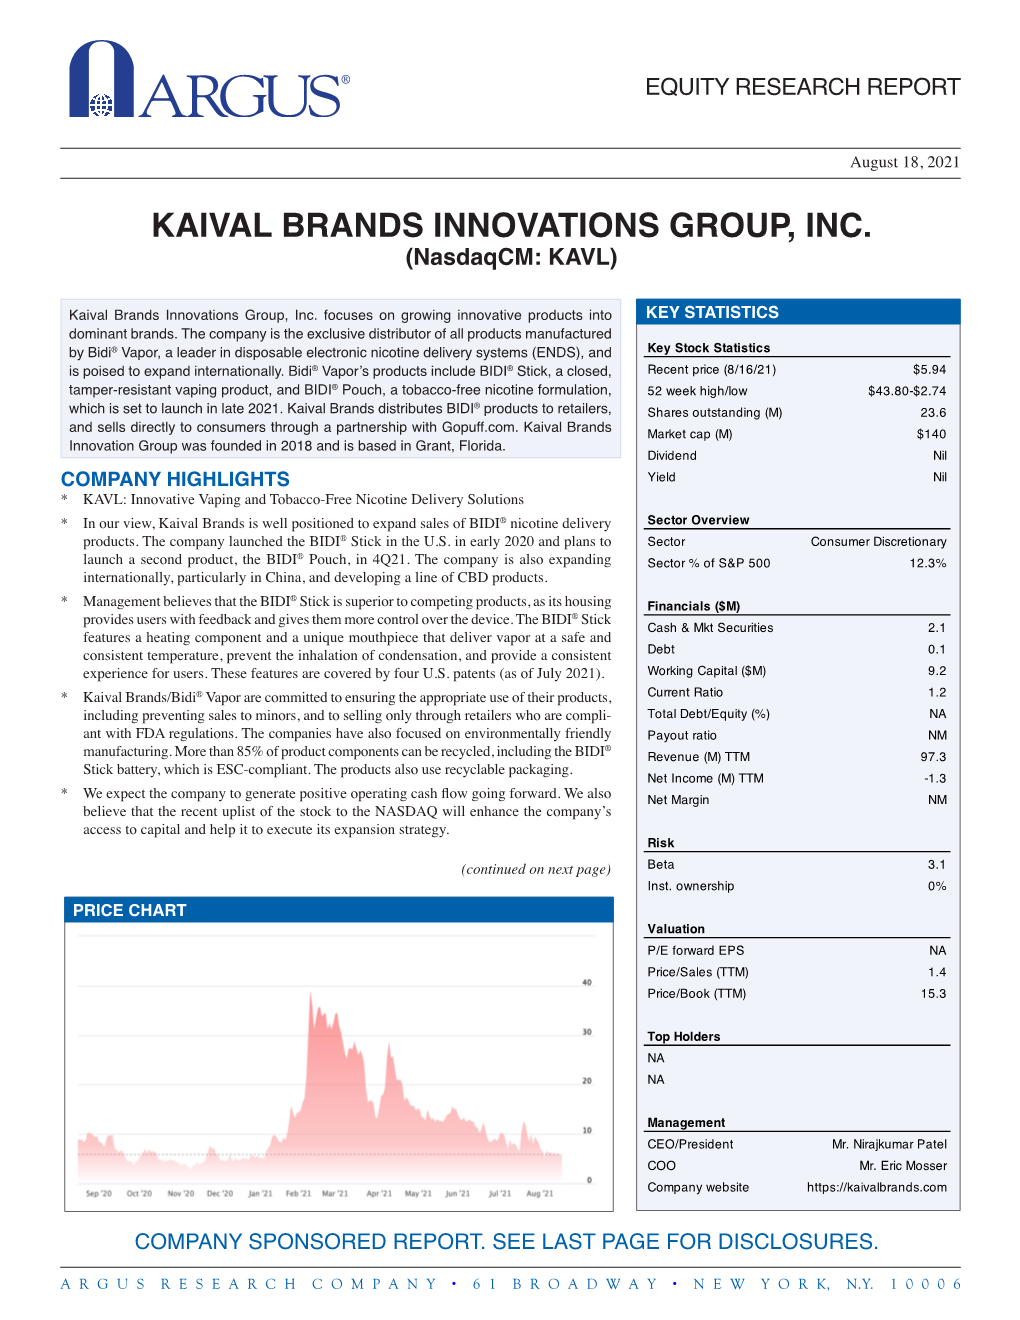 Kaival Brands Innovations Grp (Nasdaqcm: KAVL)